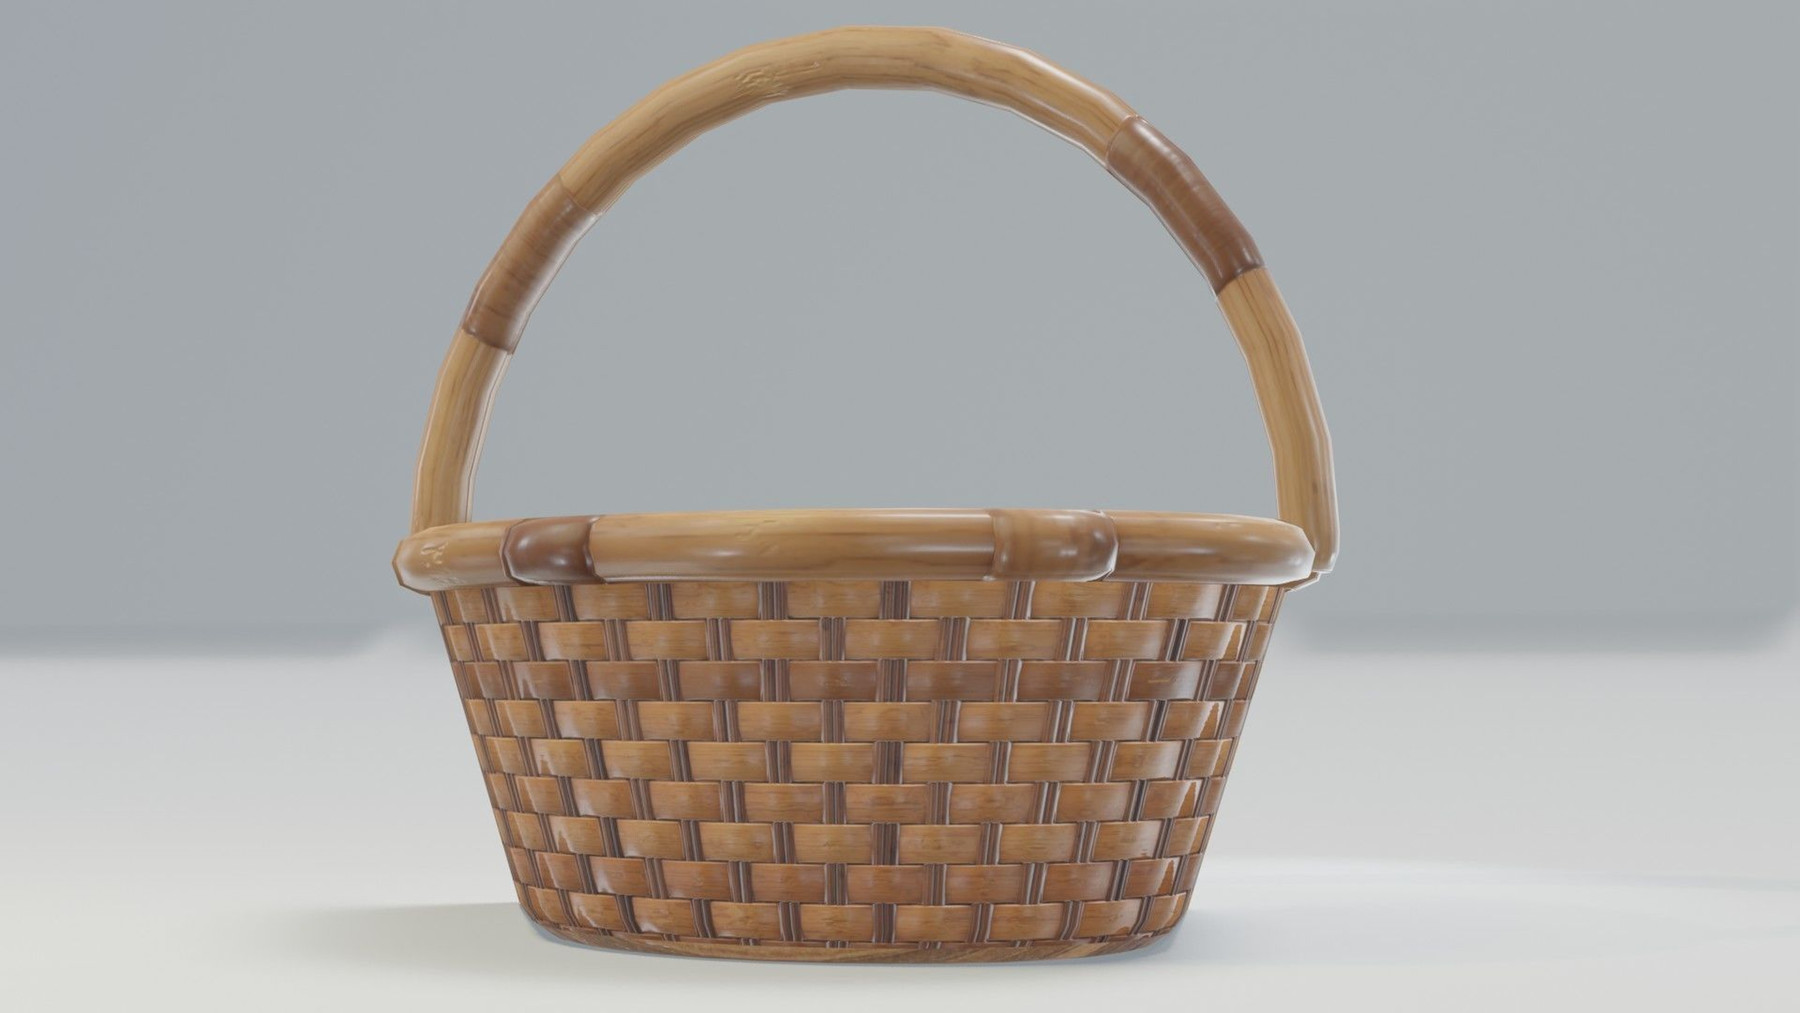 675,165 Wooden Basket Images, Stock Photos, 3D objects, & Vectors